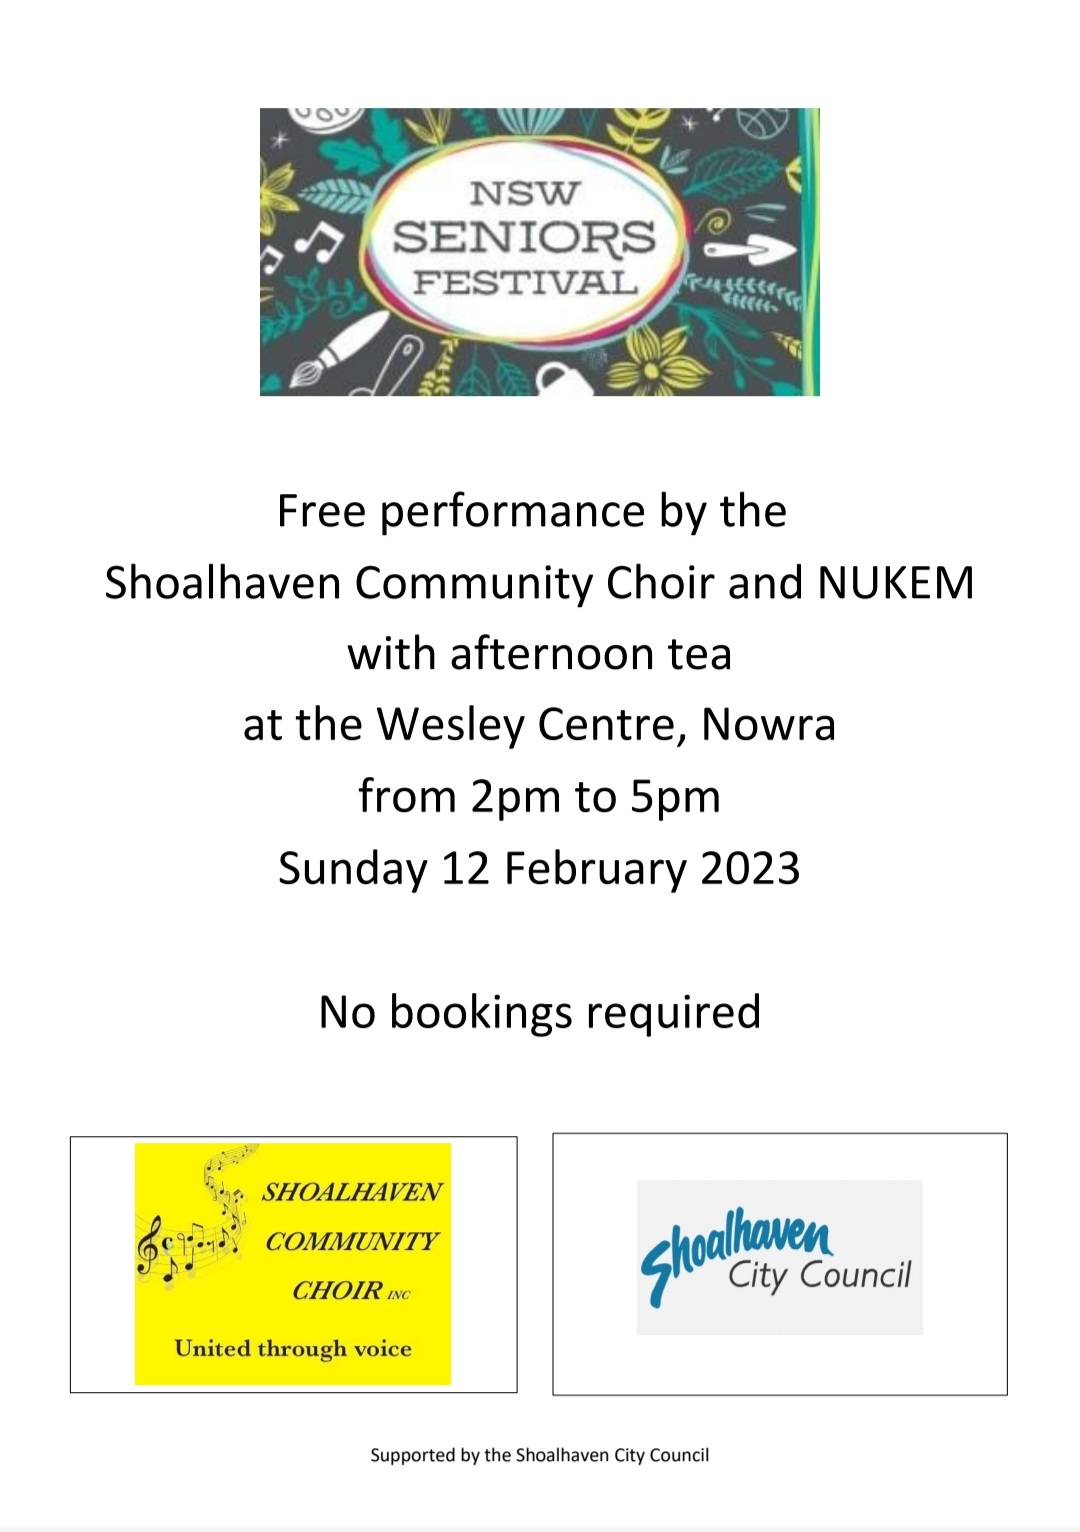 Seniors Festival Performances by the Shoalhaven Community Choir and NUKEM